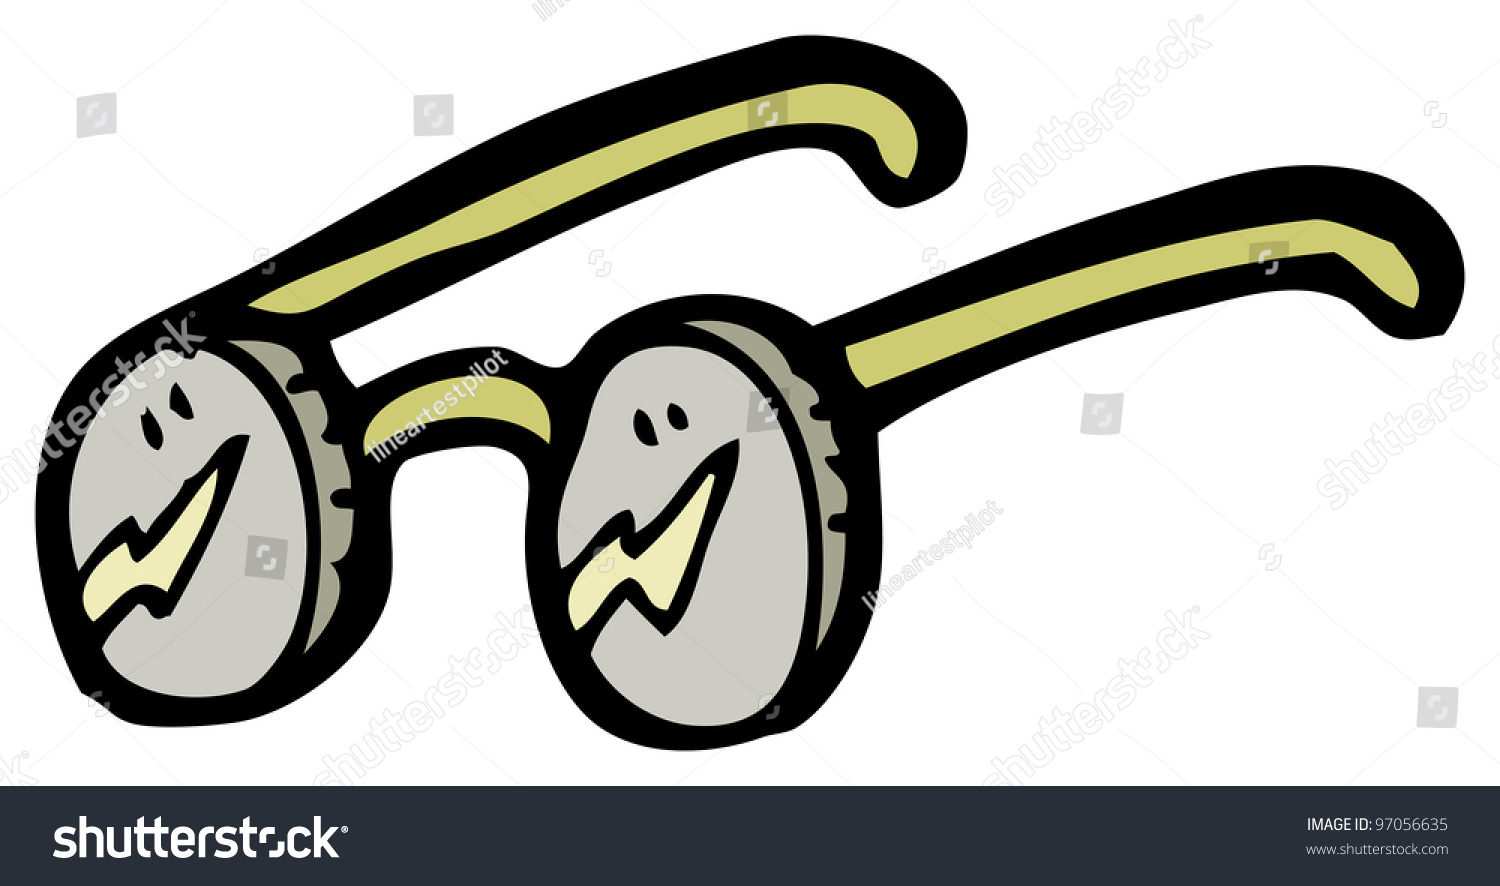 Edit Vectors Free Online - cartoon sunglasses, | Shutterstock Editor